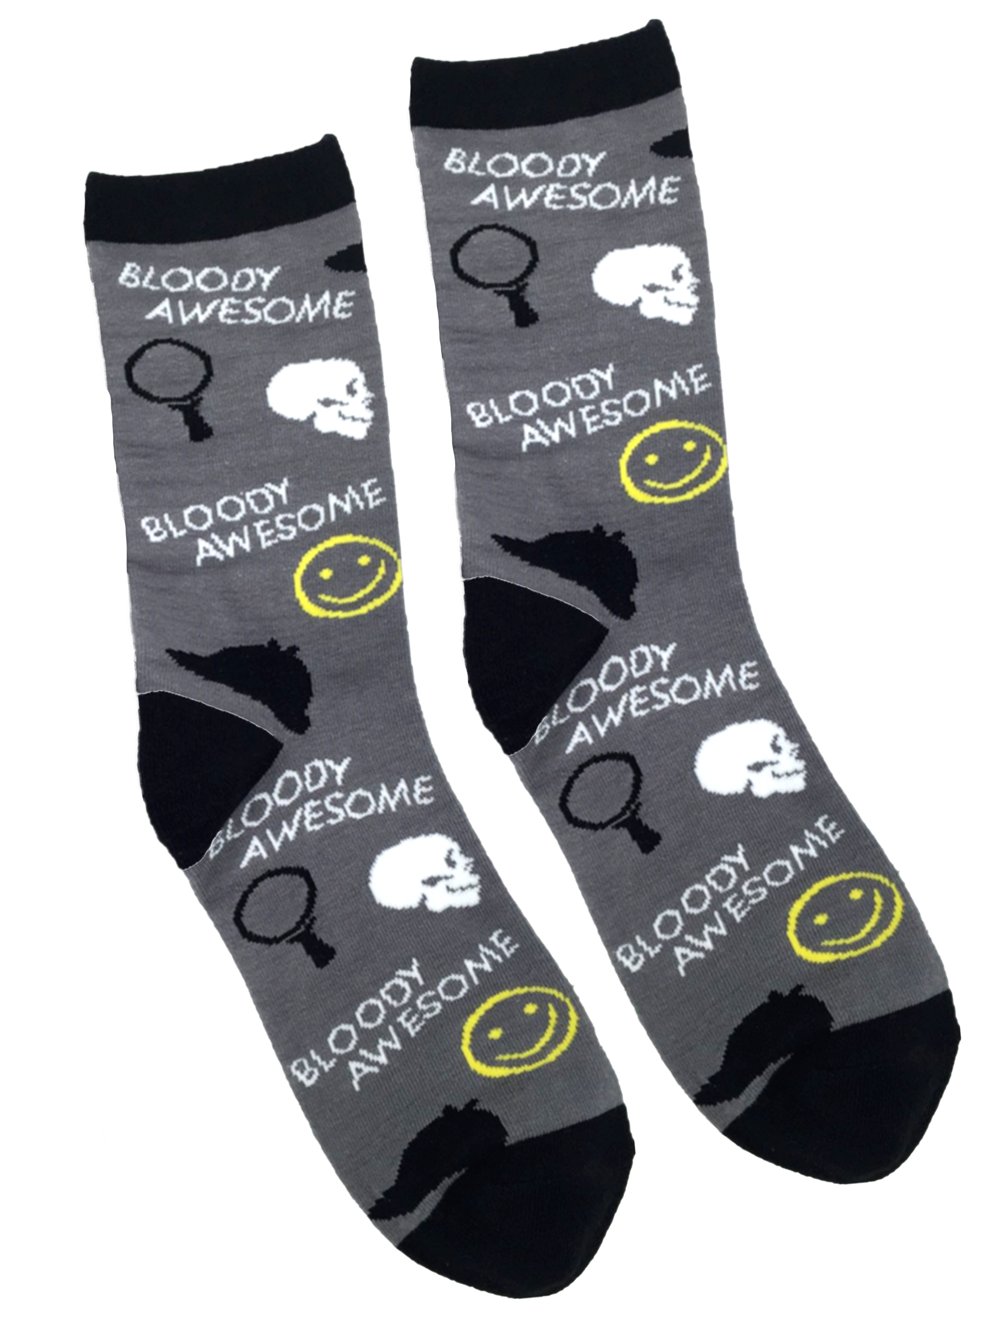 Sherlock Parody Socks